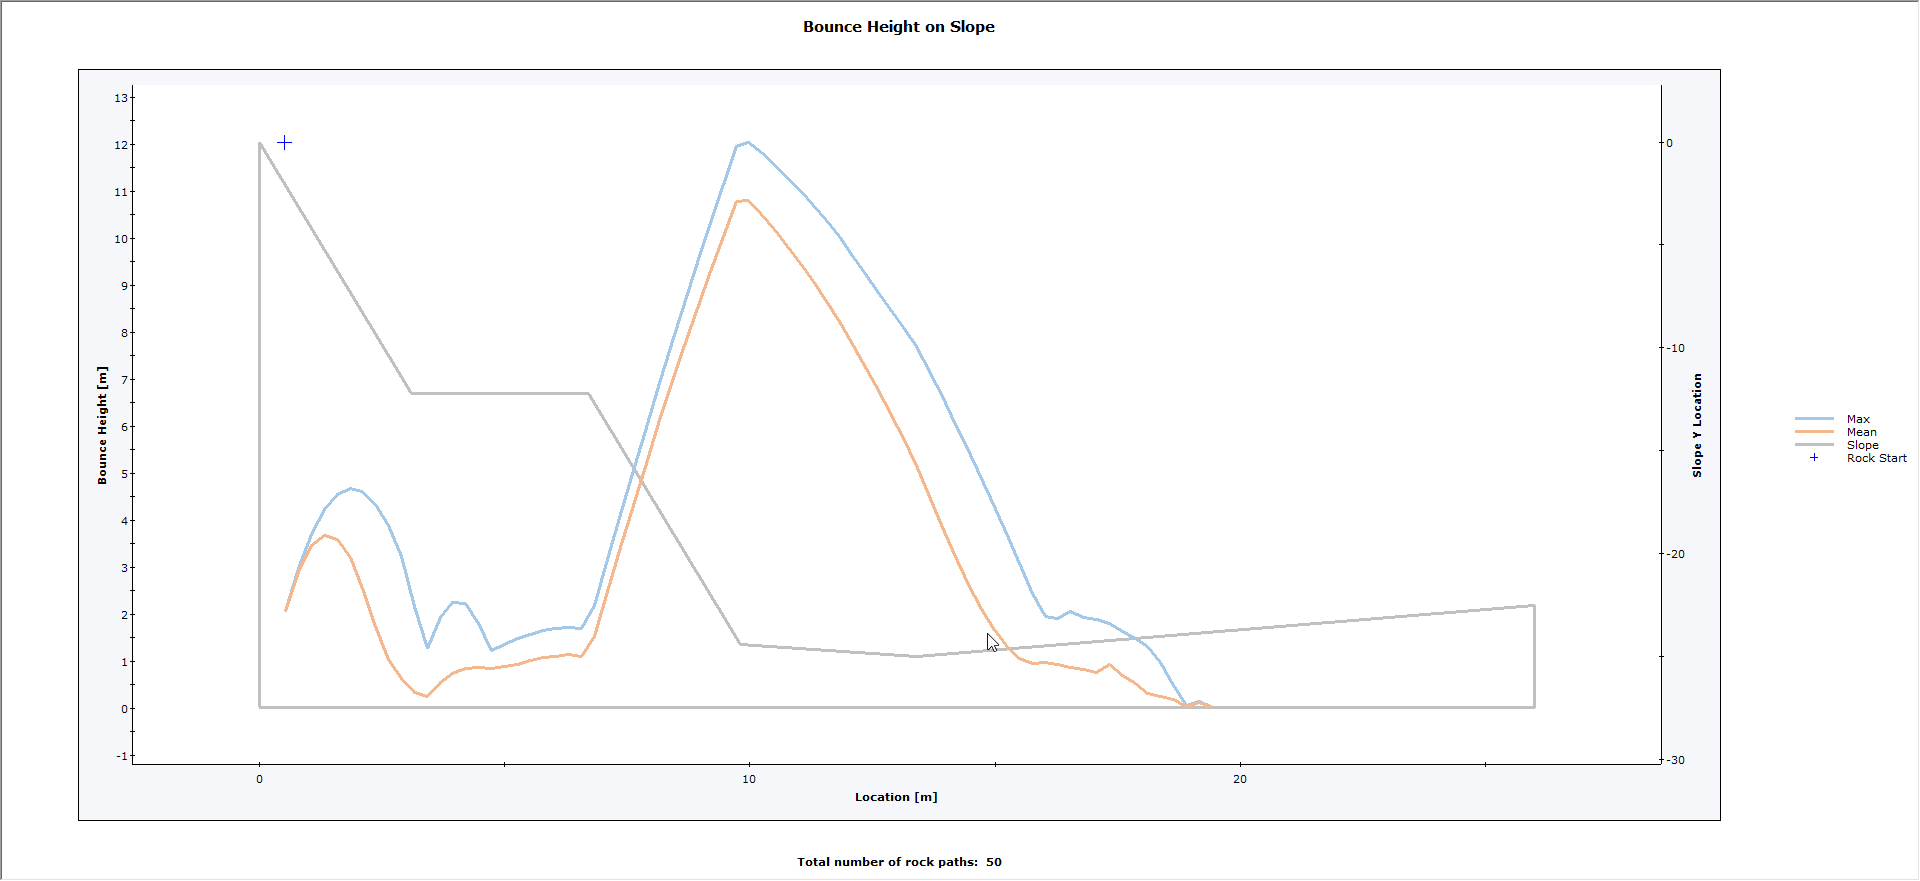 Bounce Height on Slope maximum Value plot 